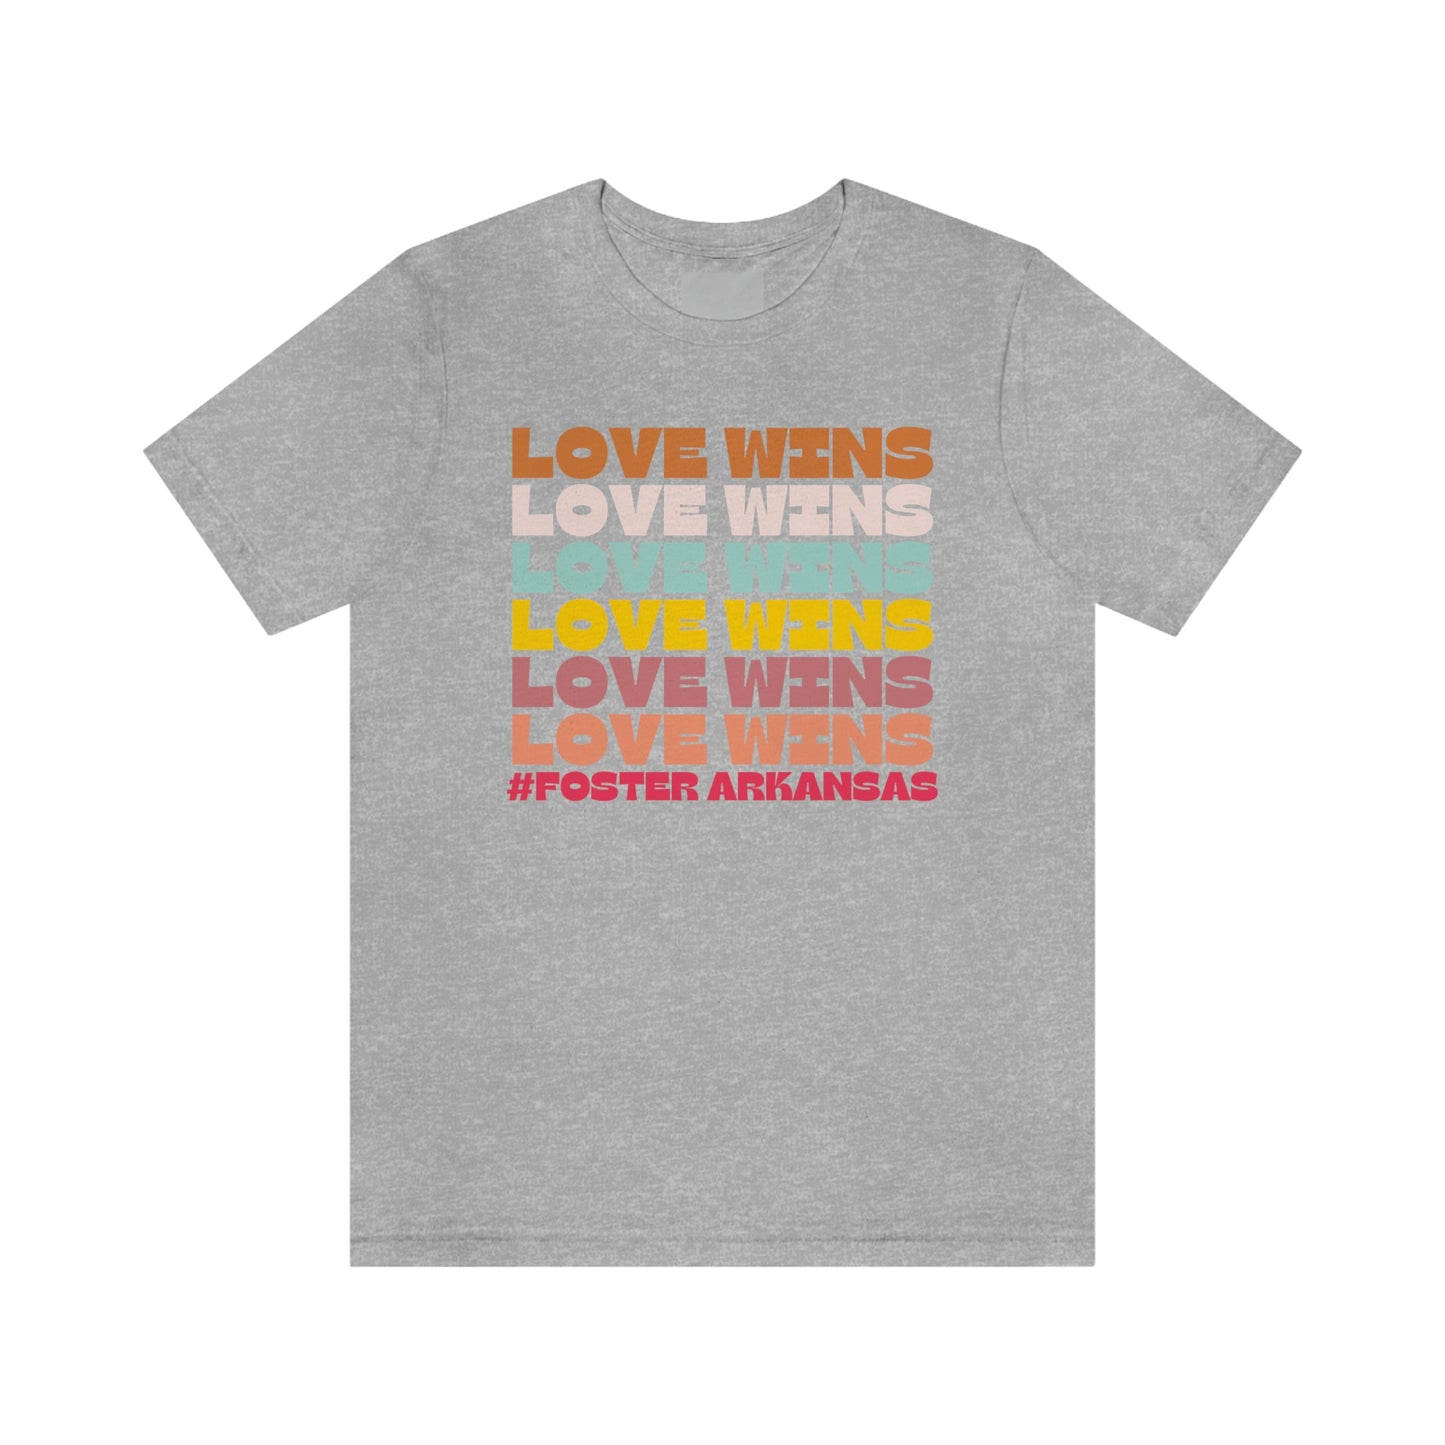 Love Wins Repeat #Foster Arkansas Shirt